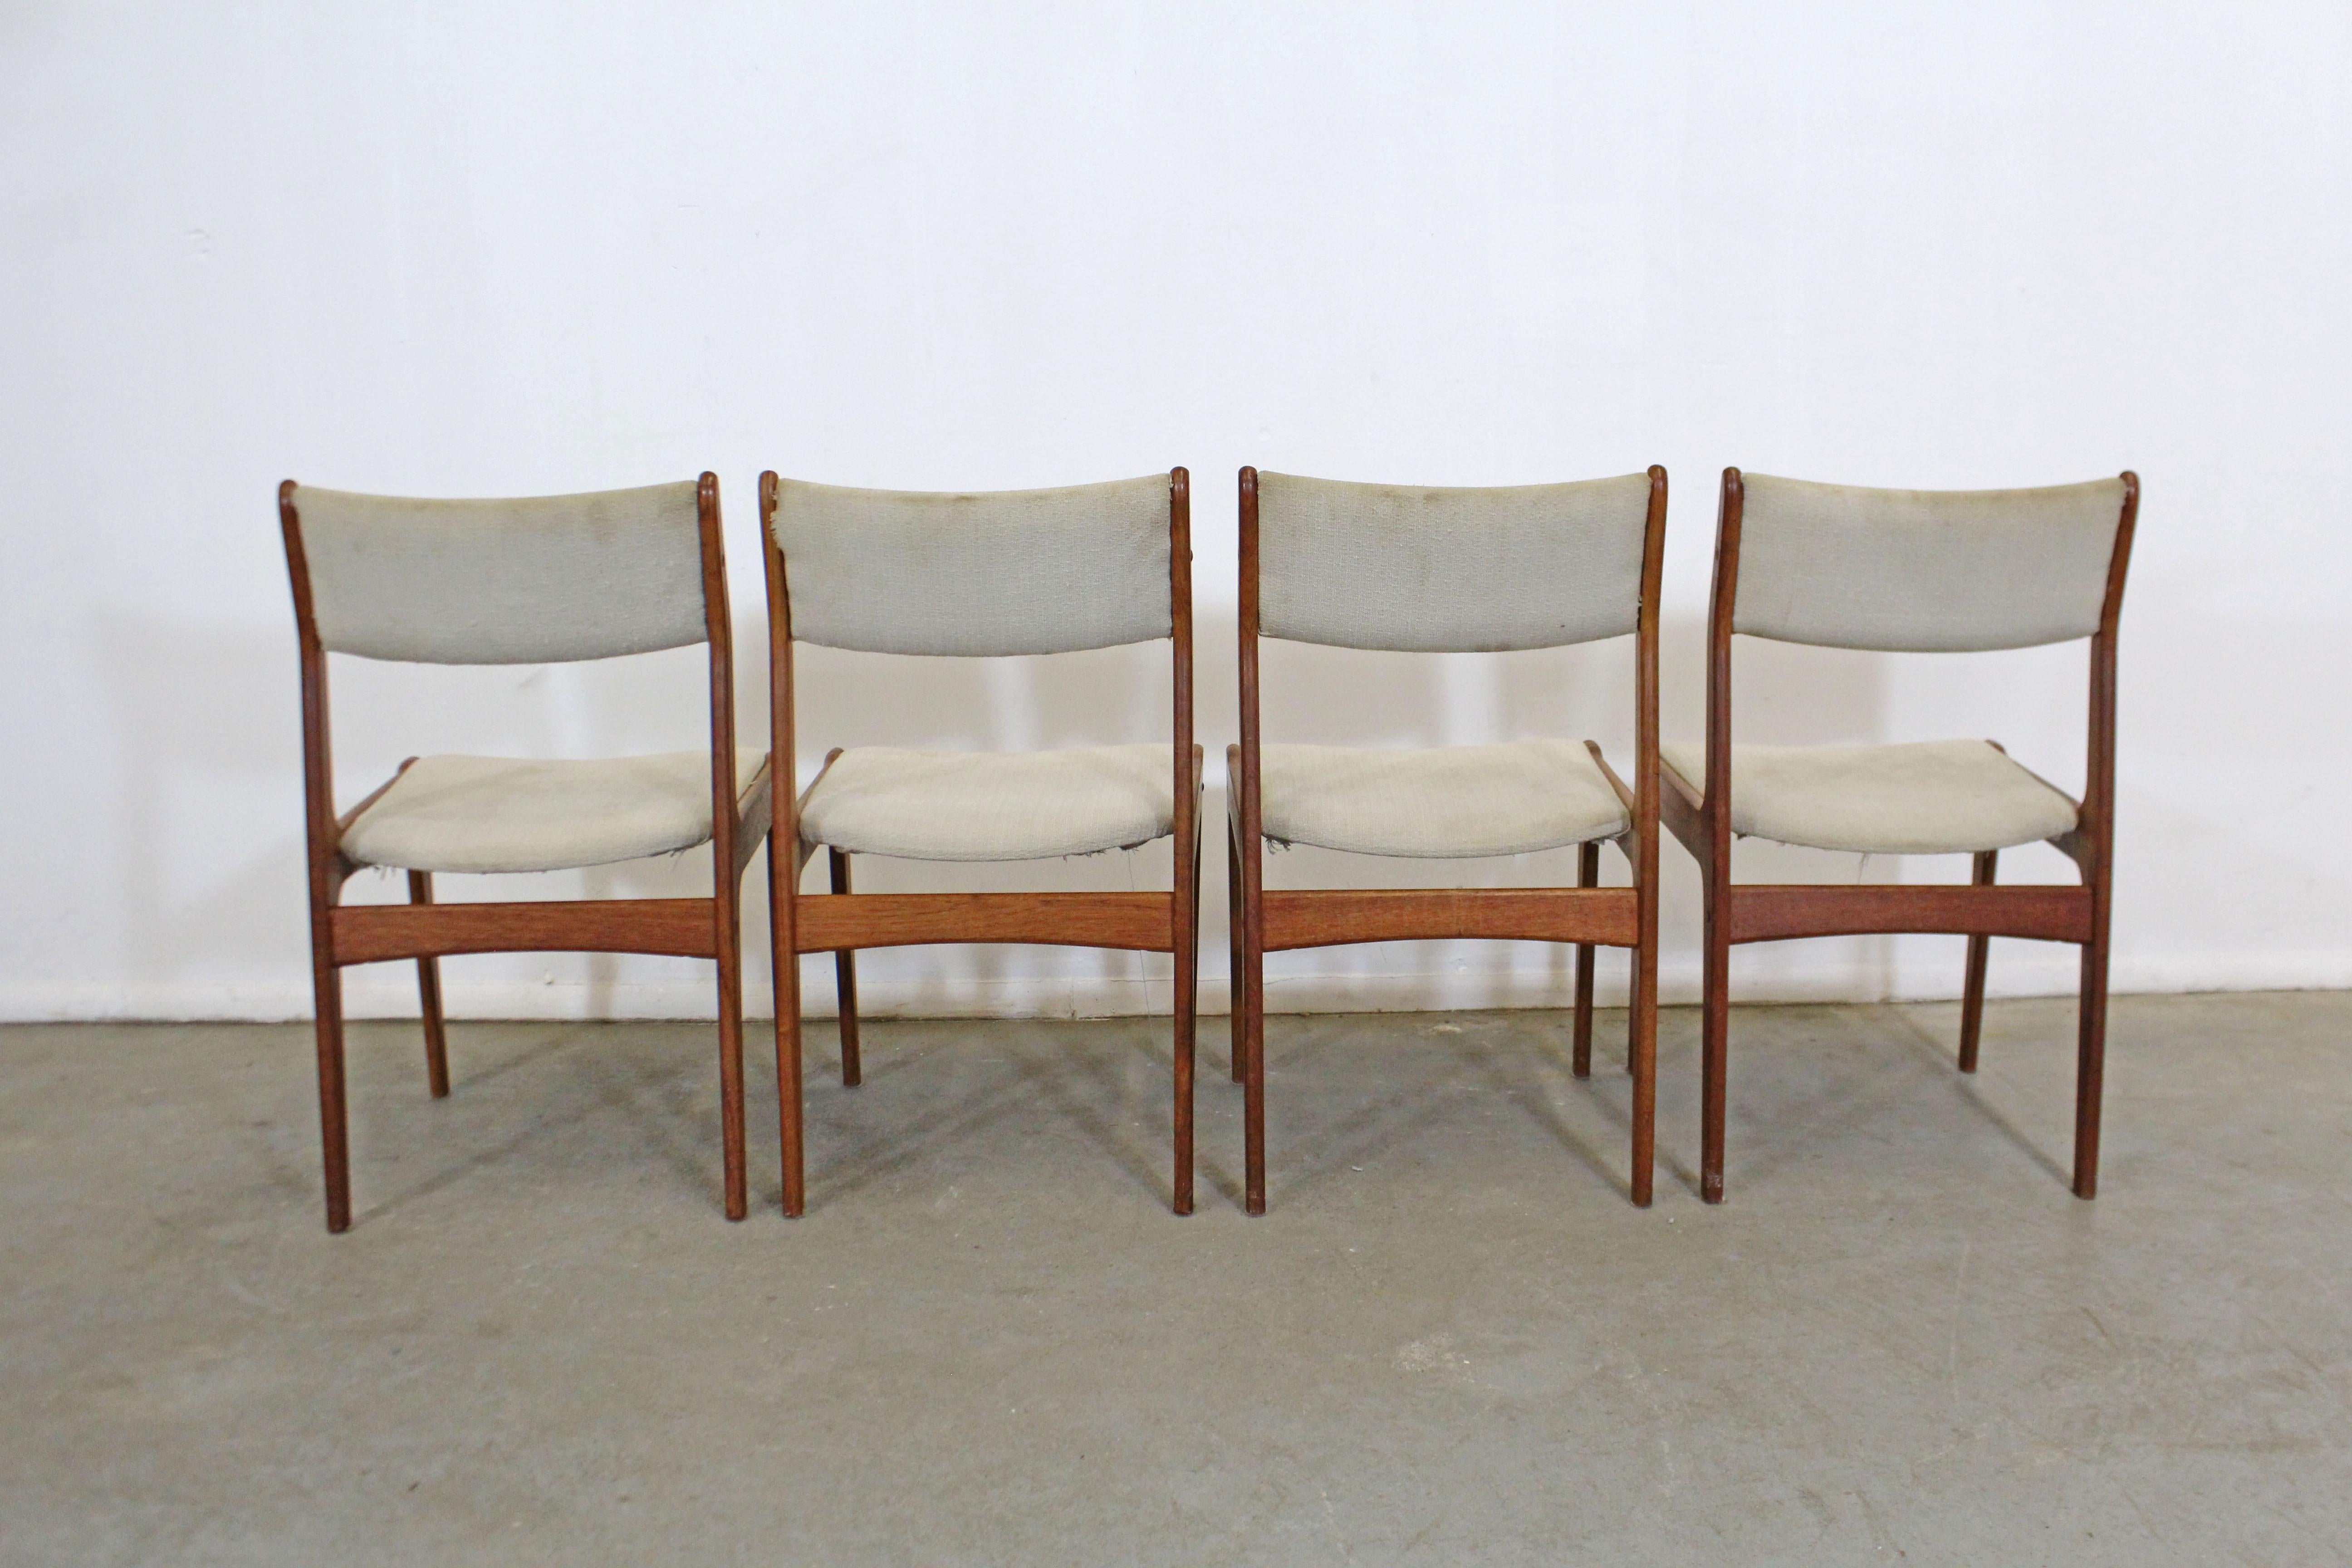 20th Century Set of 4 Midcentury Danish Modern Teak Dining Chairs